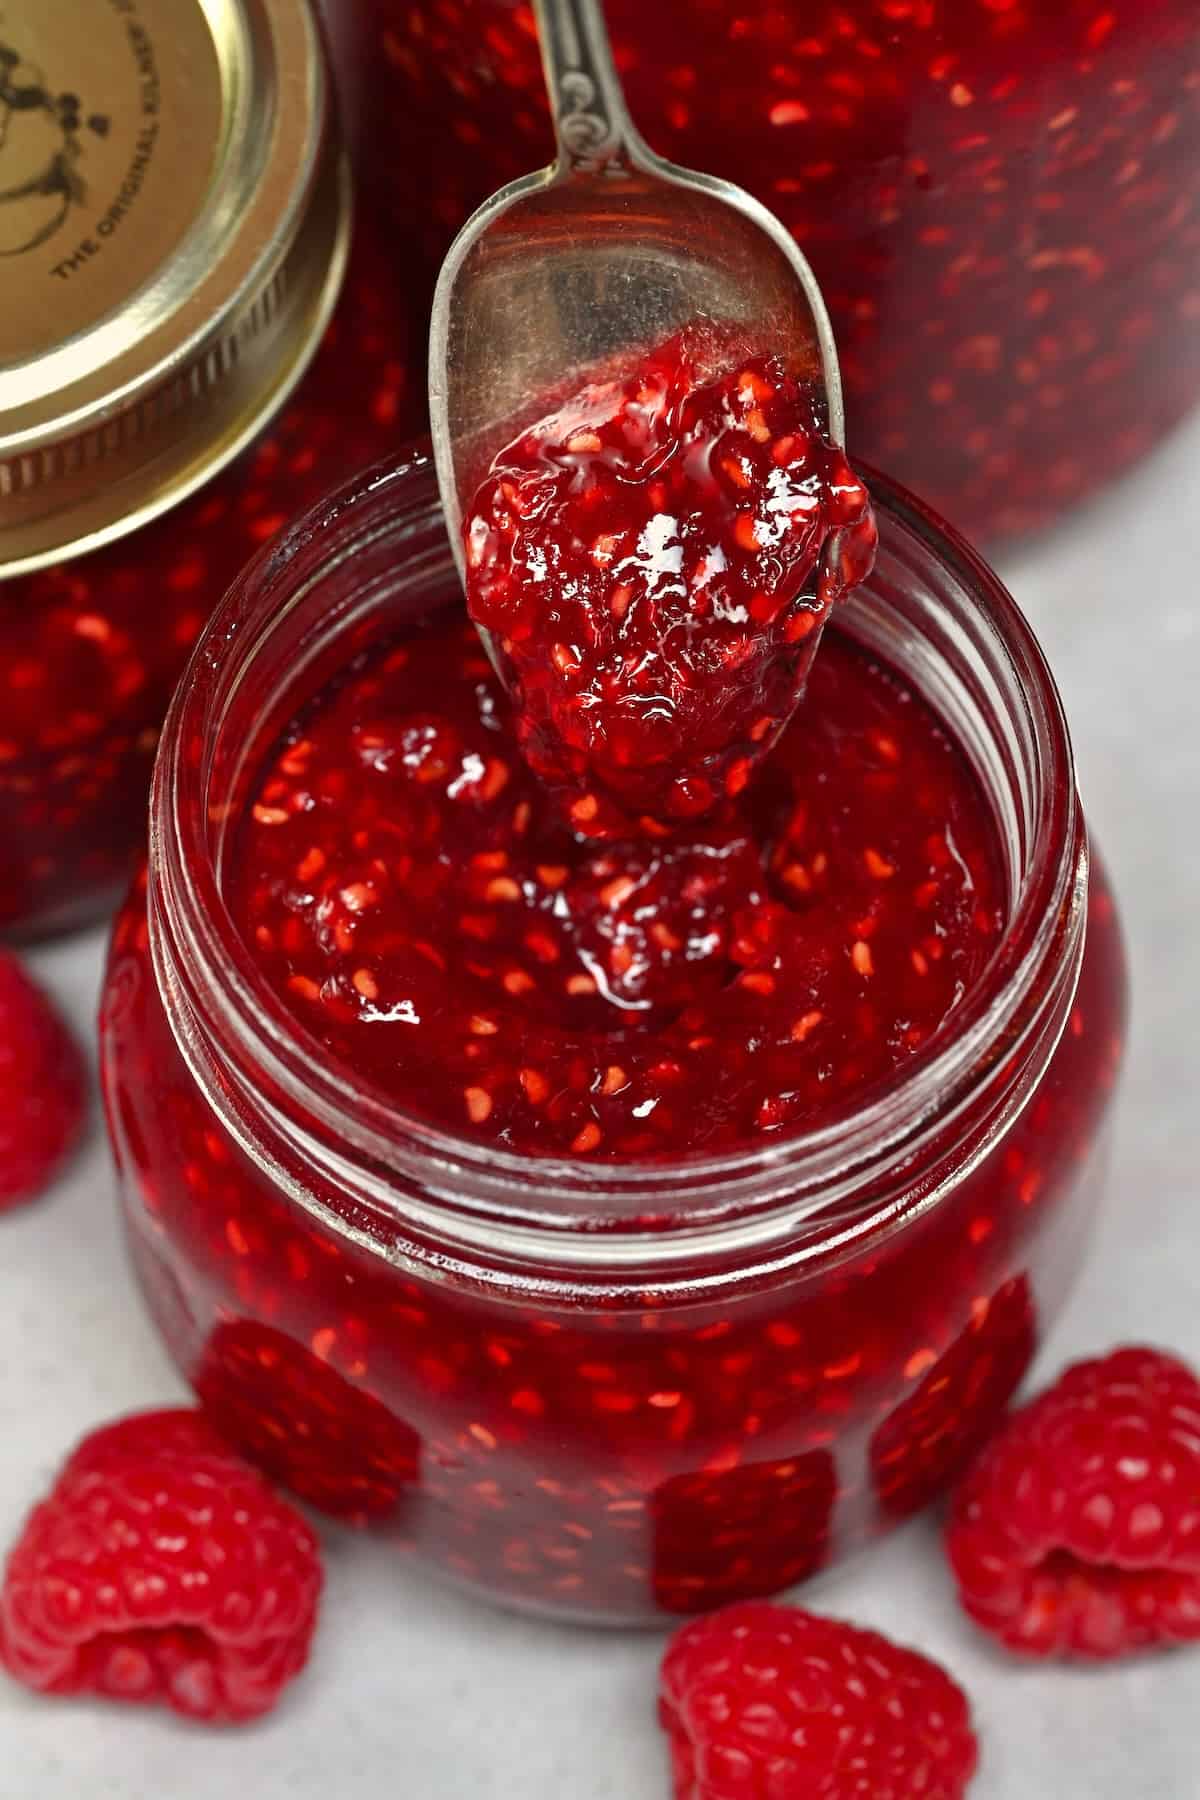 A spoonful of homemade raspberry jam